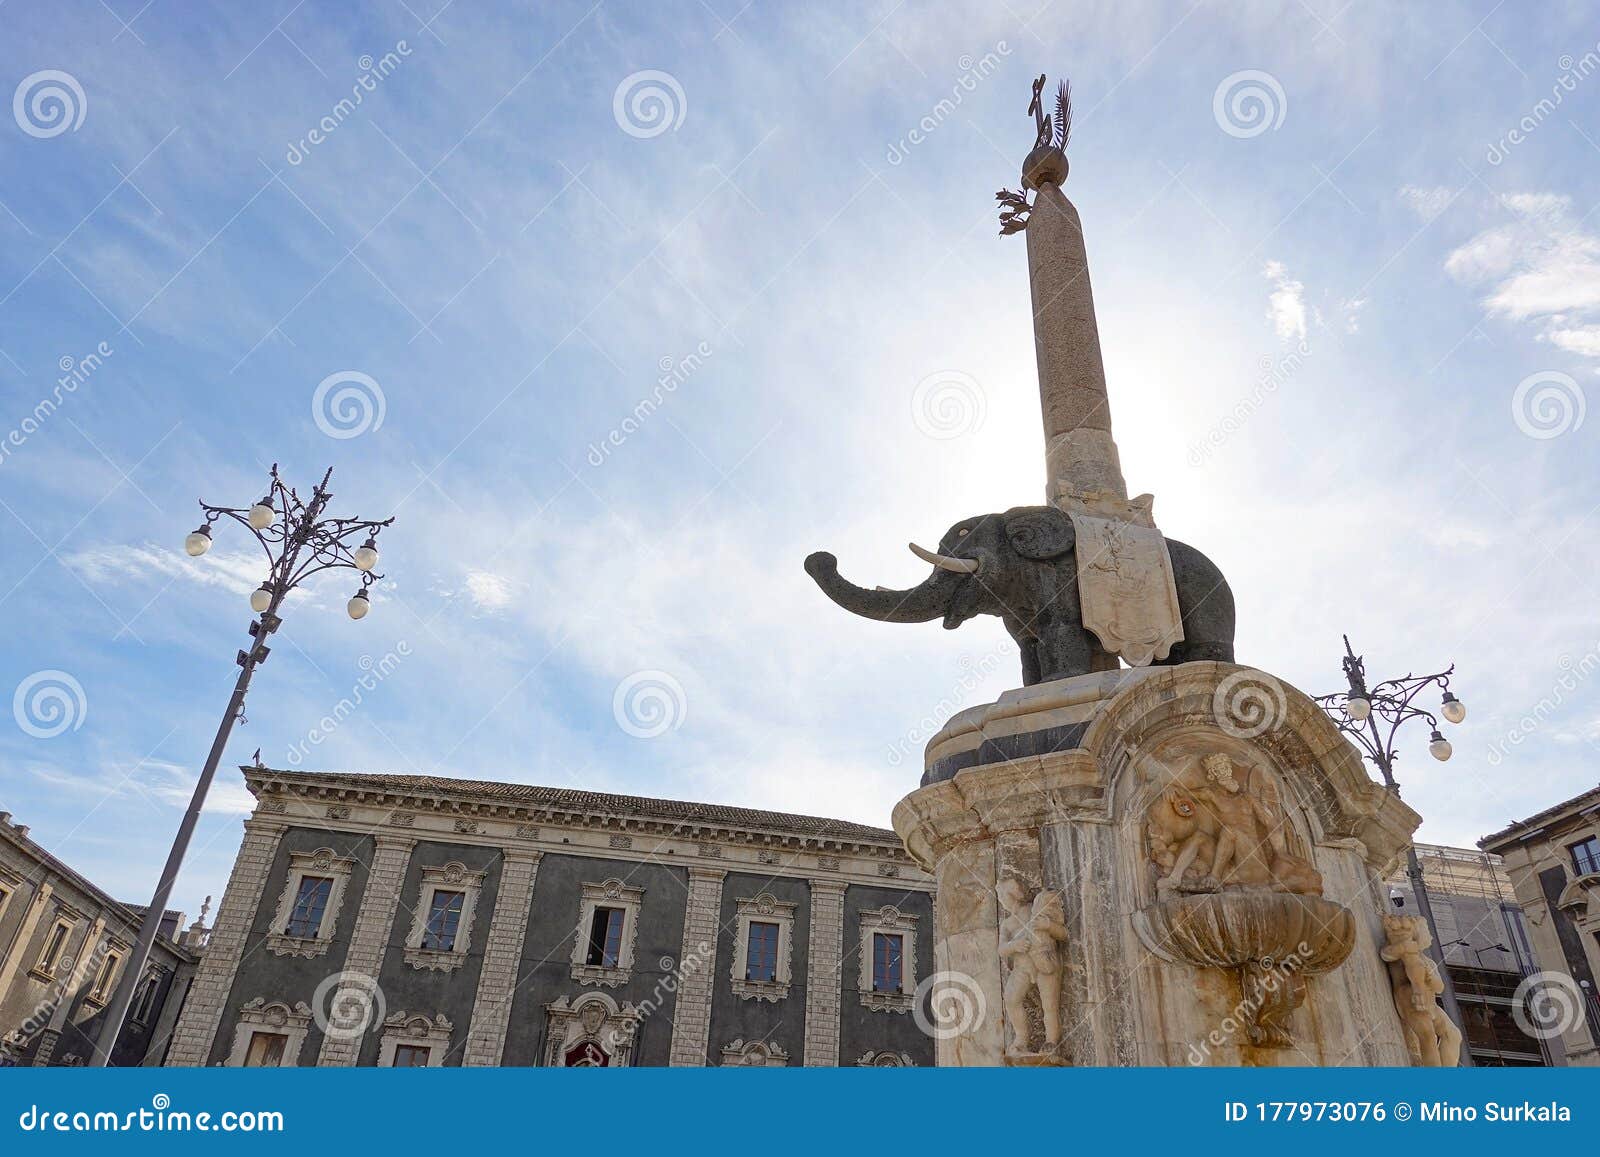 fontana dell elefante obelisk in the center of piazza del duomo in catania, sicily in strong backlight